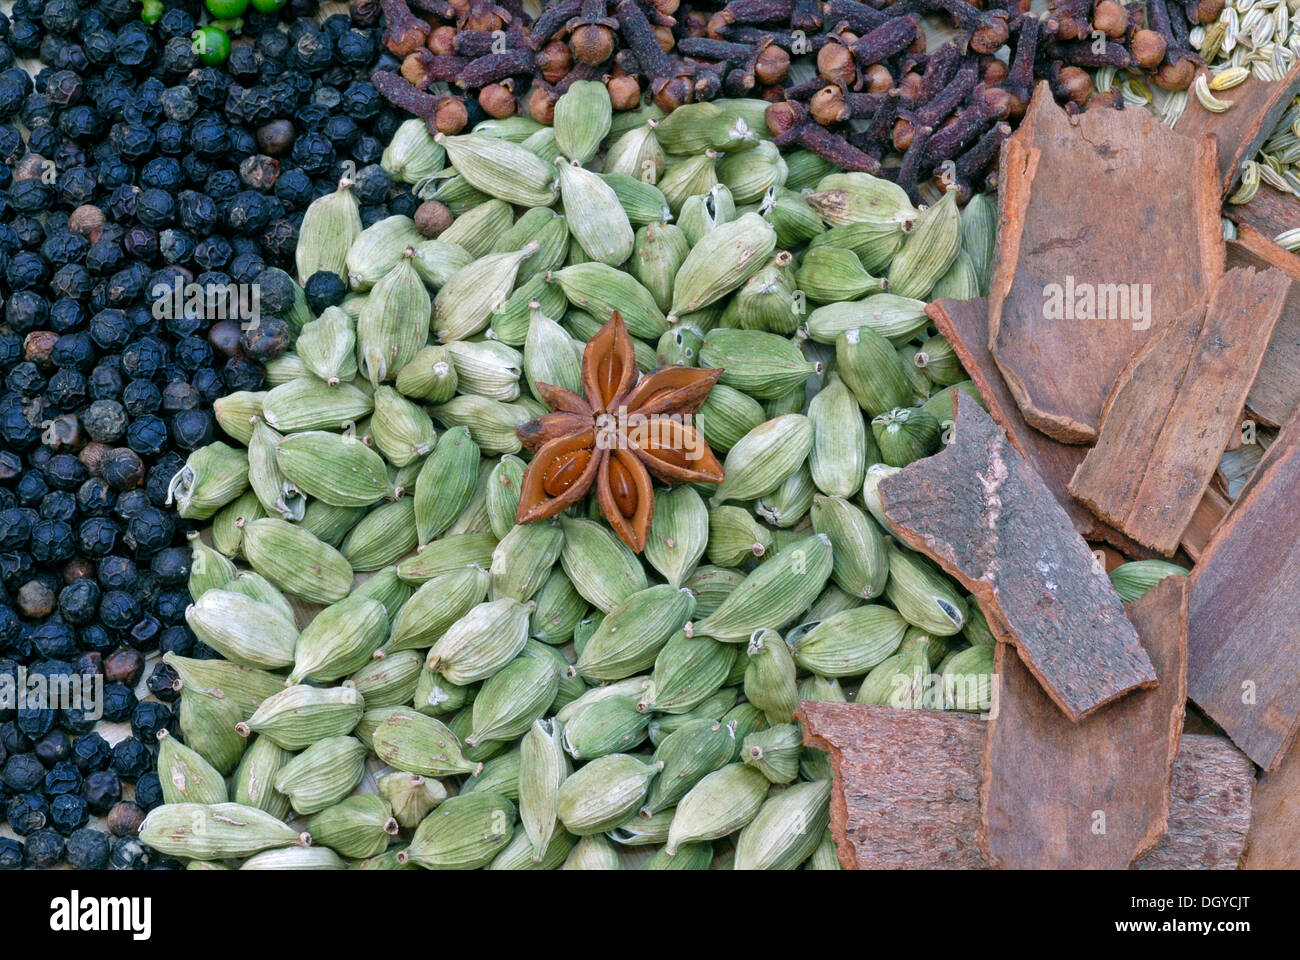 Kerala spices, including black pepper, cardamom, cinnamon, star anise and cloves, Thekkady, Kerala, South India, India Stock Photo